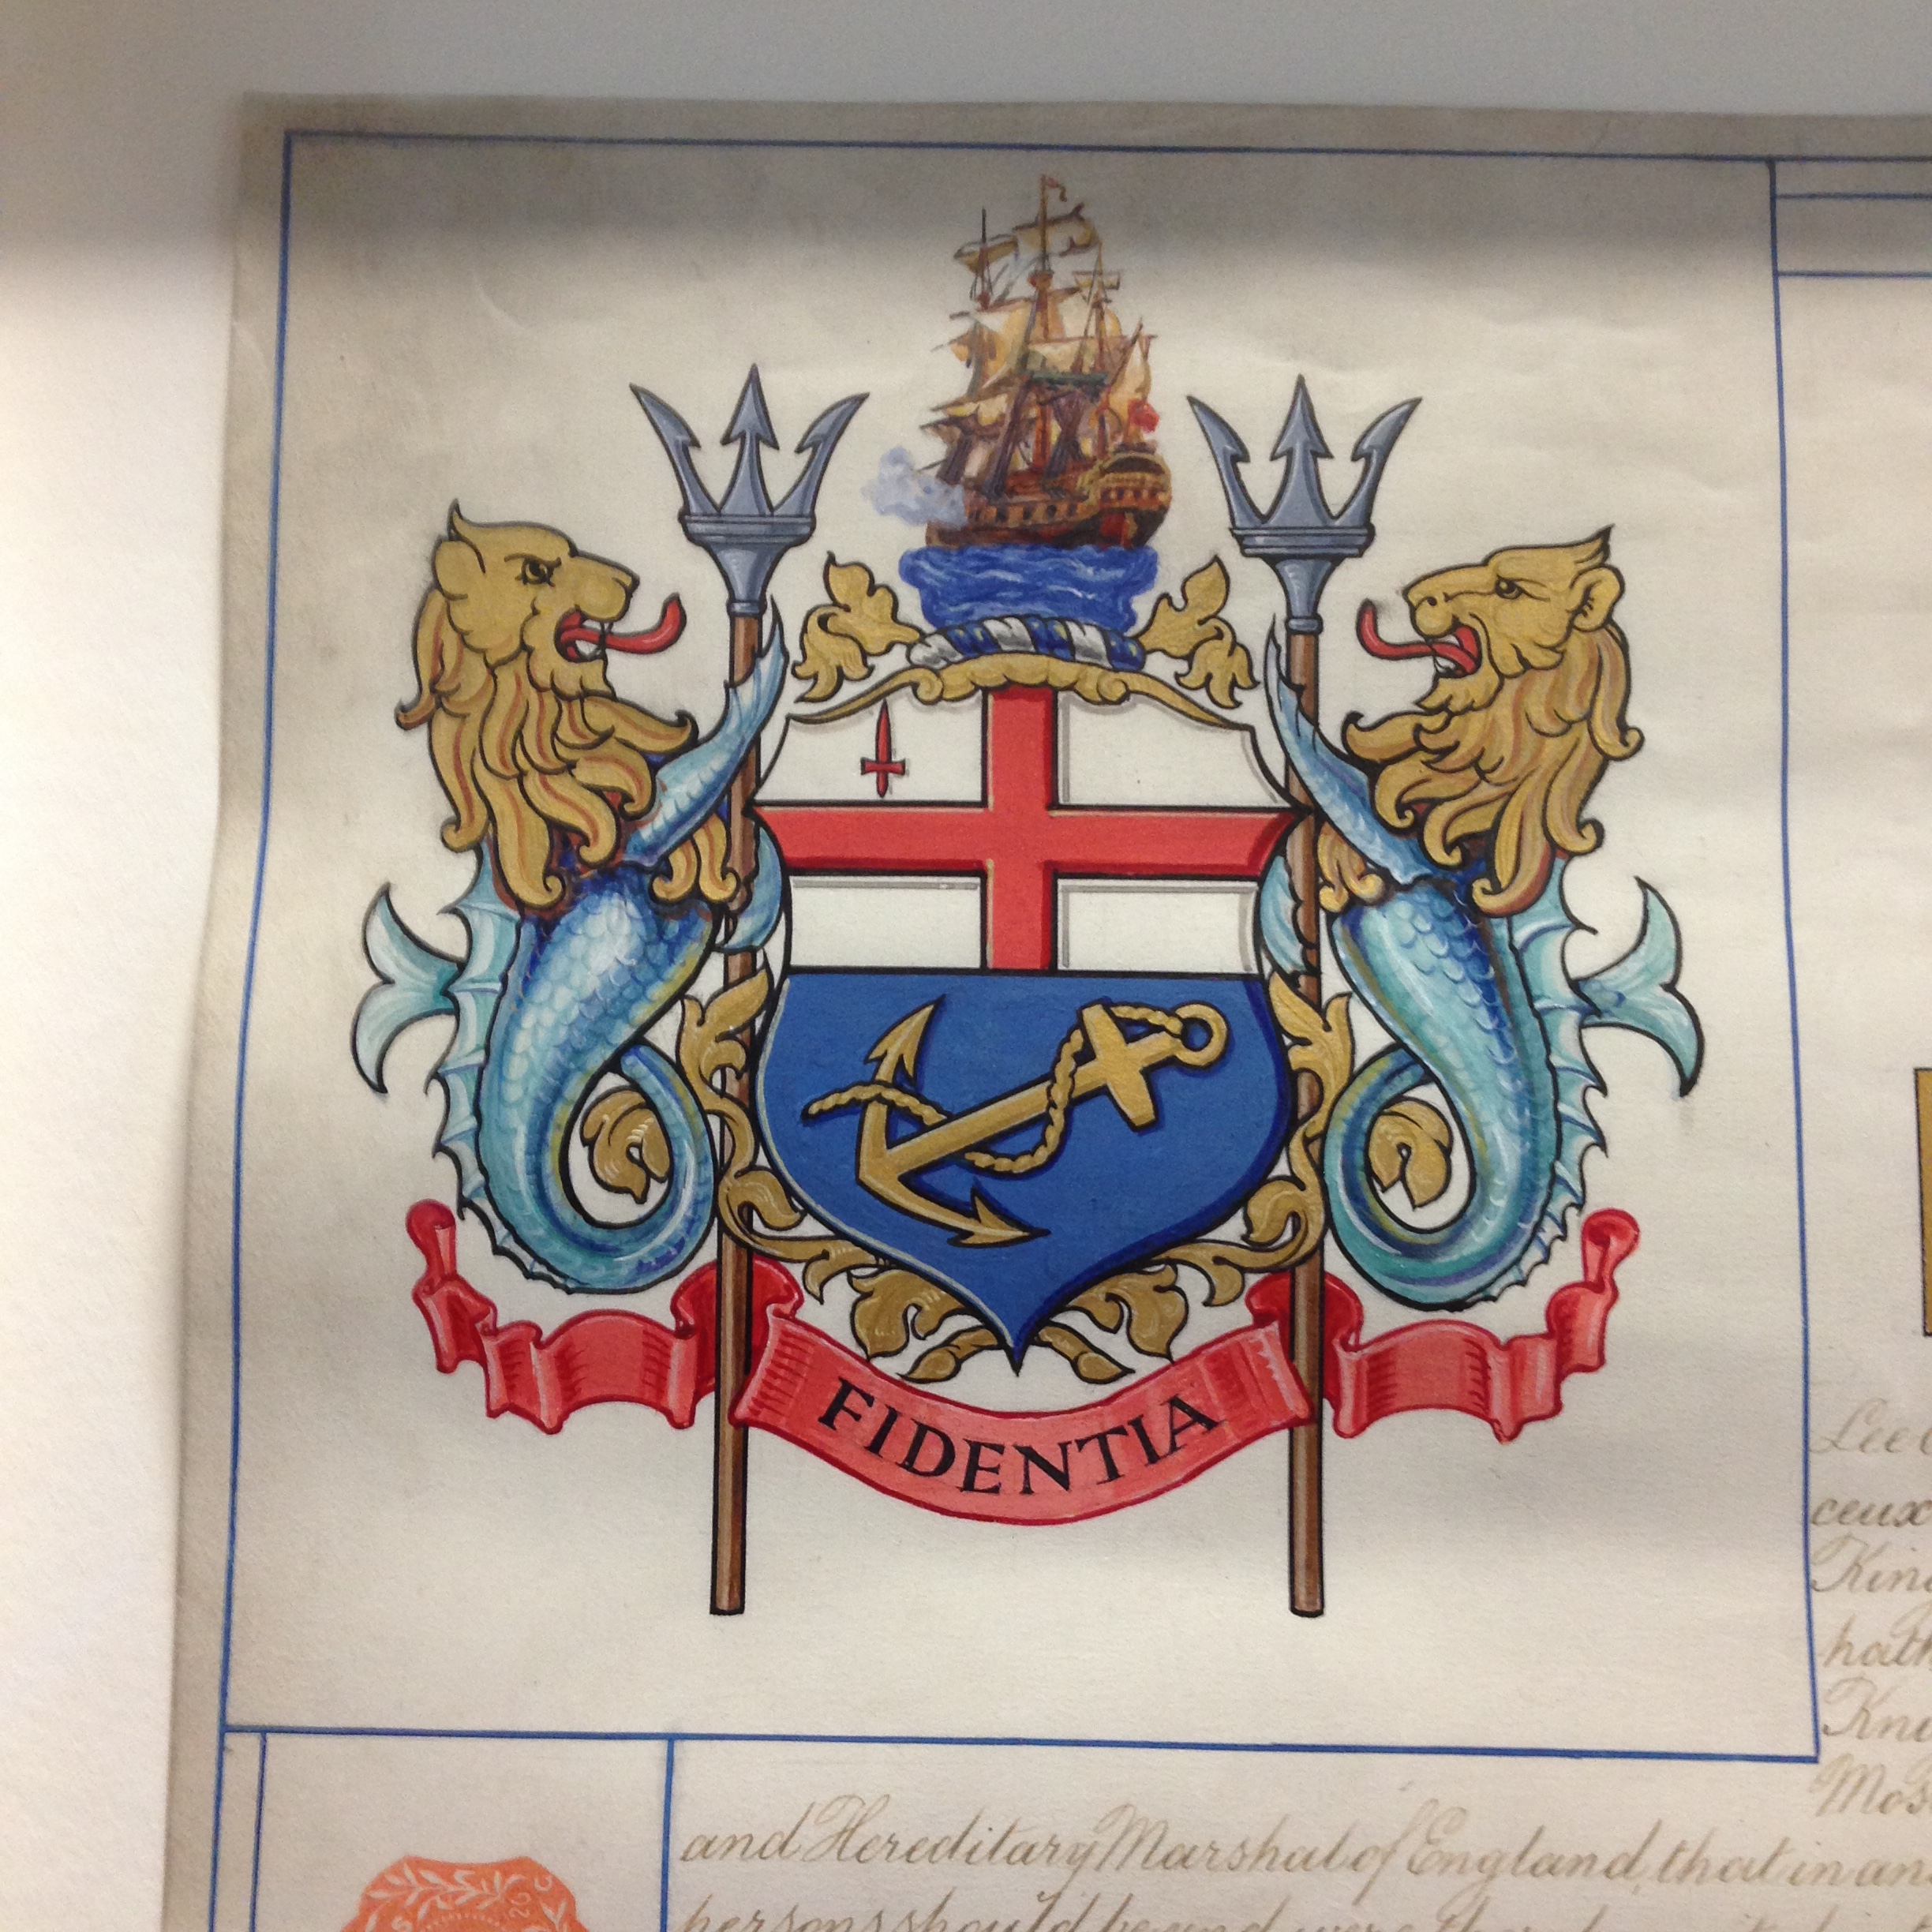 Lloyd's coat of arms